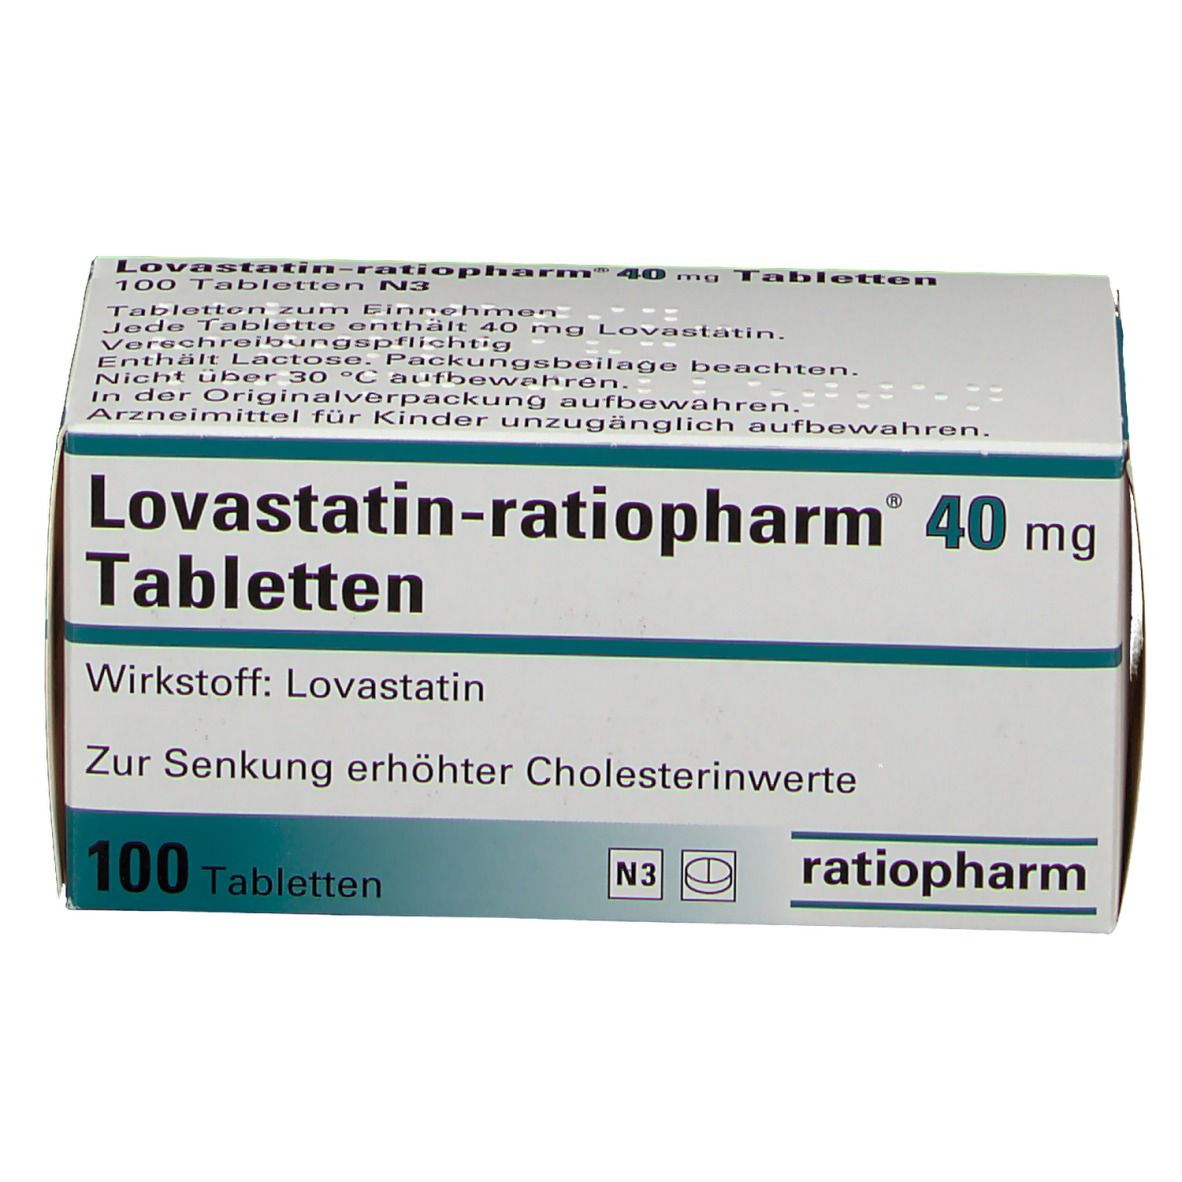 Lovastatin-ratiopharm® 20 mg